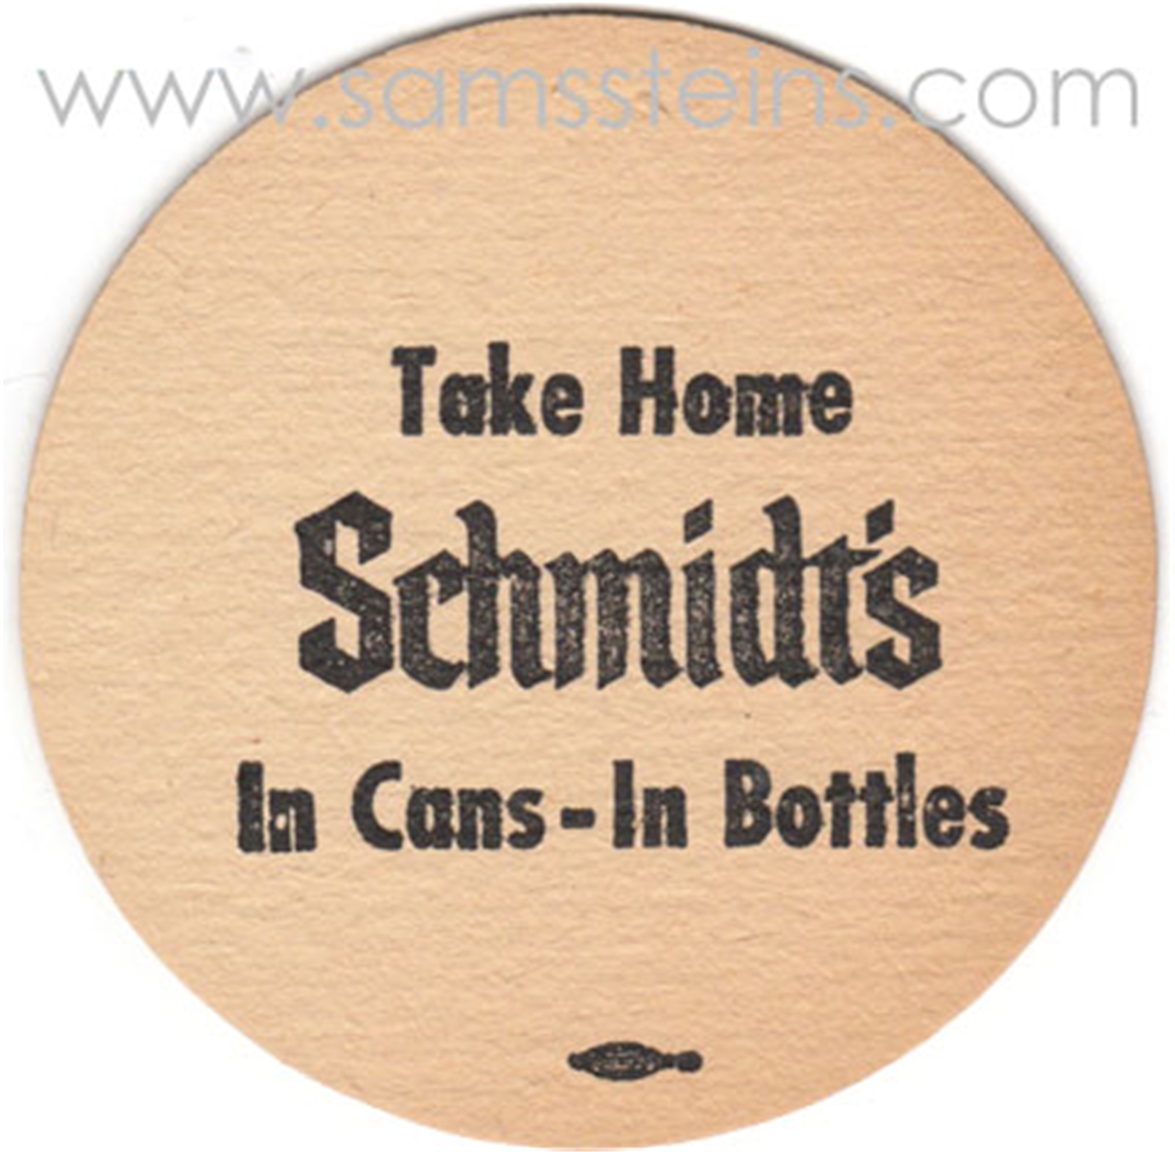 Schmidt's Take Home Beer Coaster